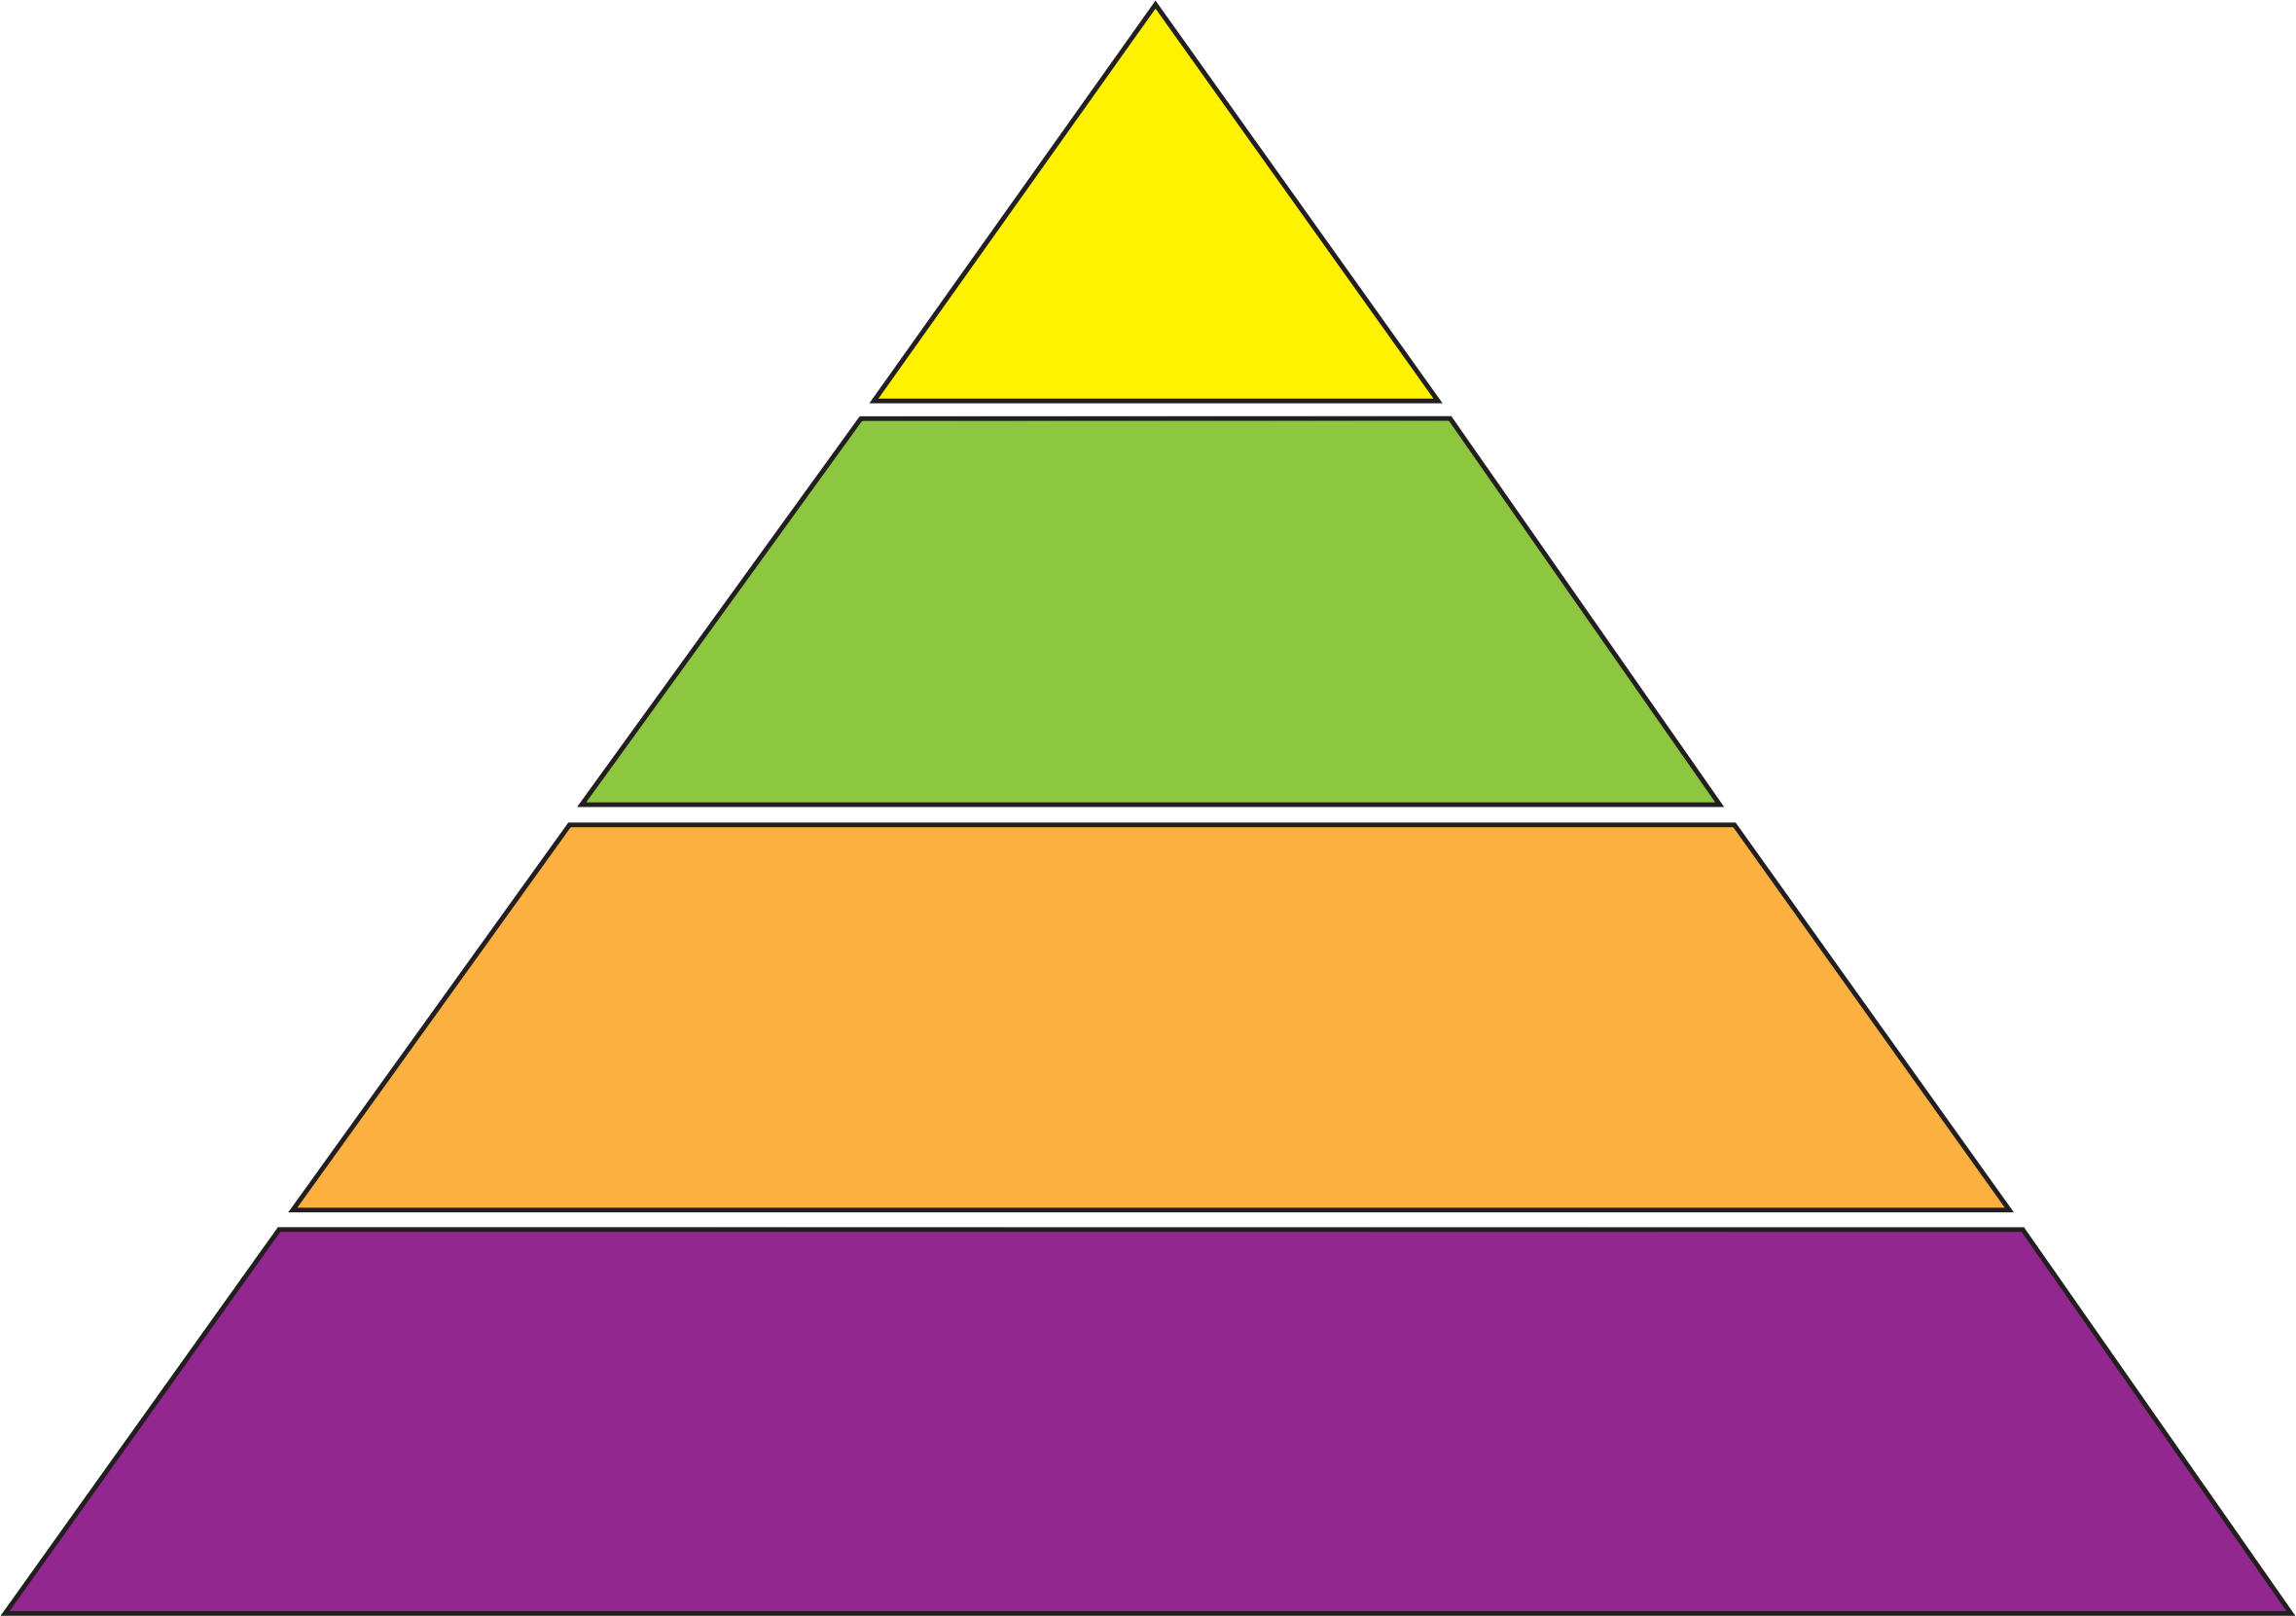 Free Transparent Pyramid, Download Free Transparent Pyramid png images ...